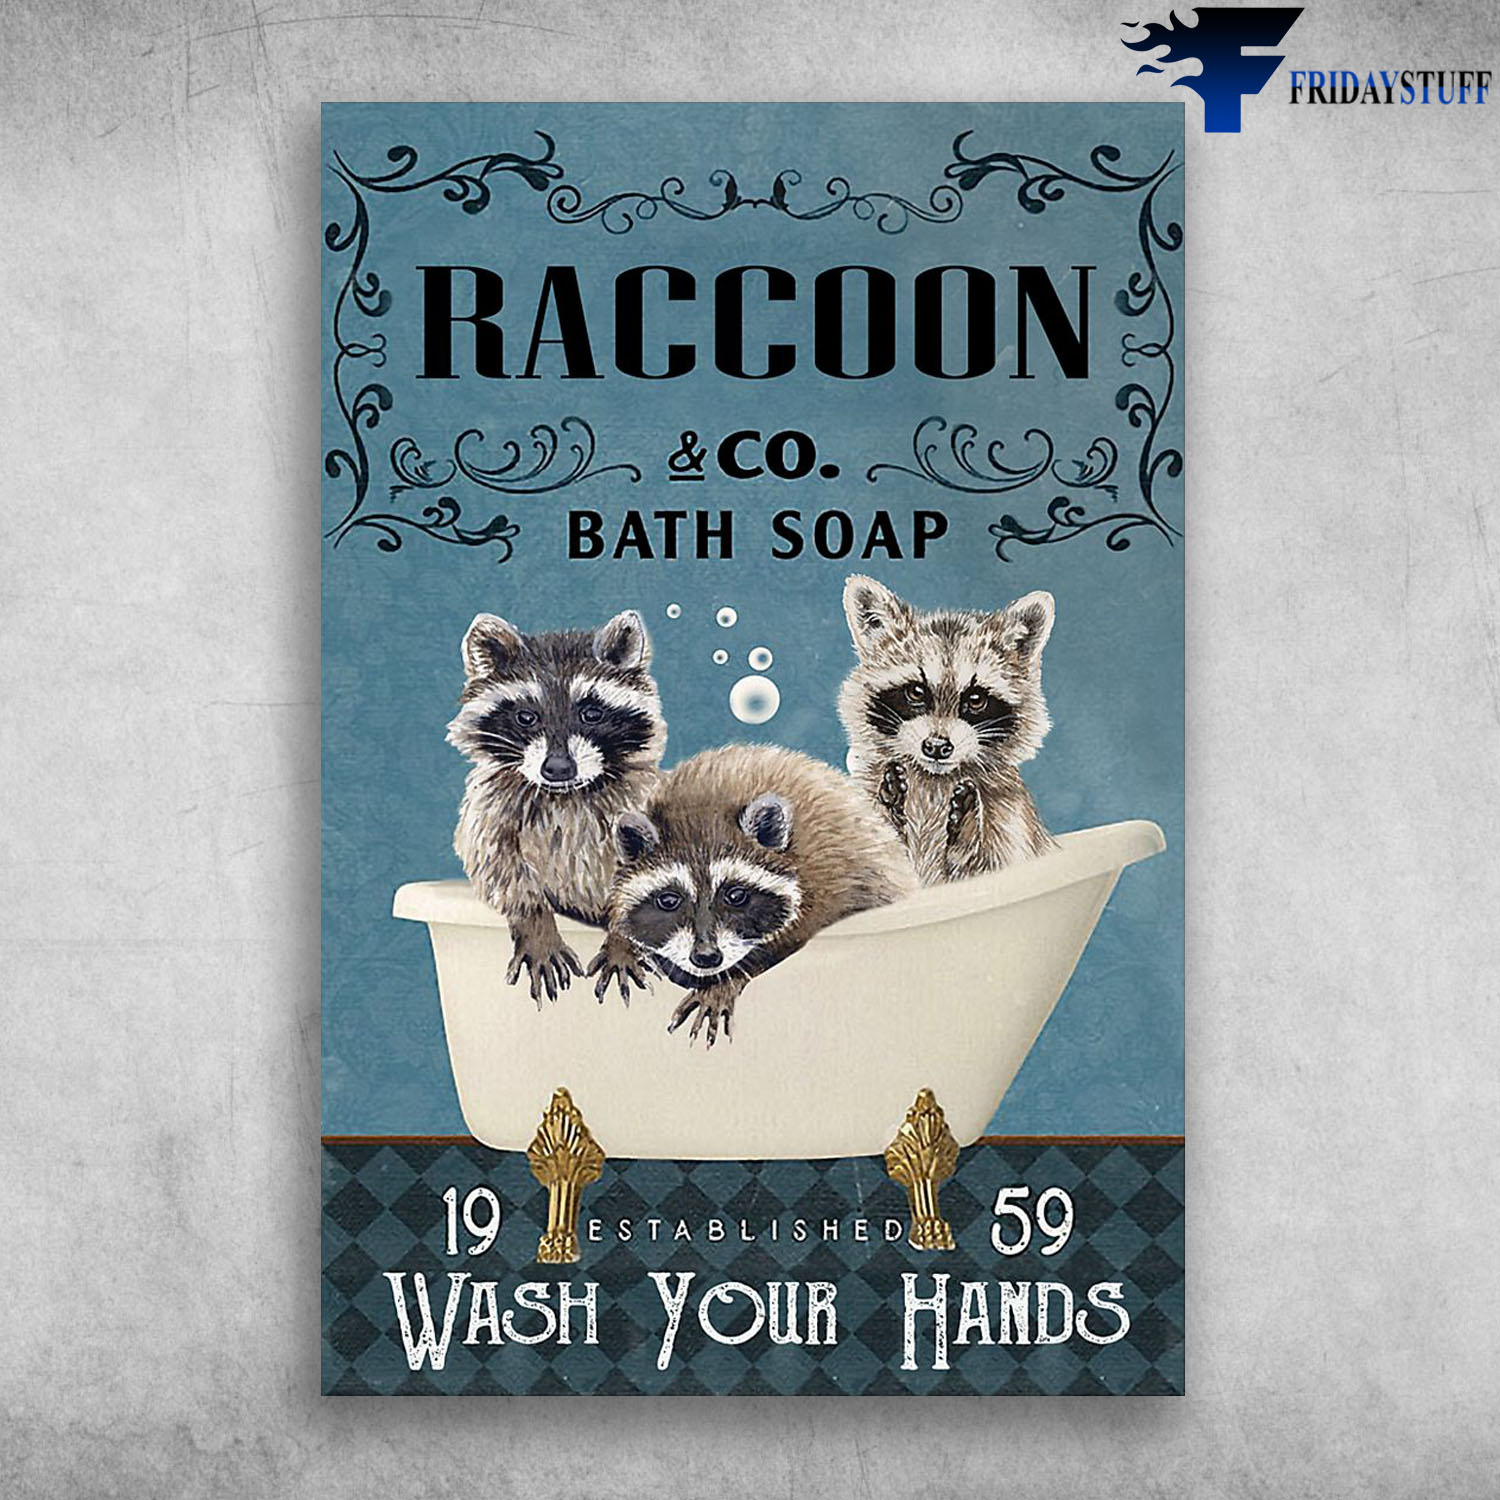 Raccoon In Bathtub Bath Soap Established Wash Your Hands